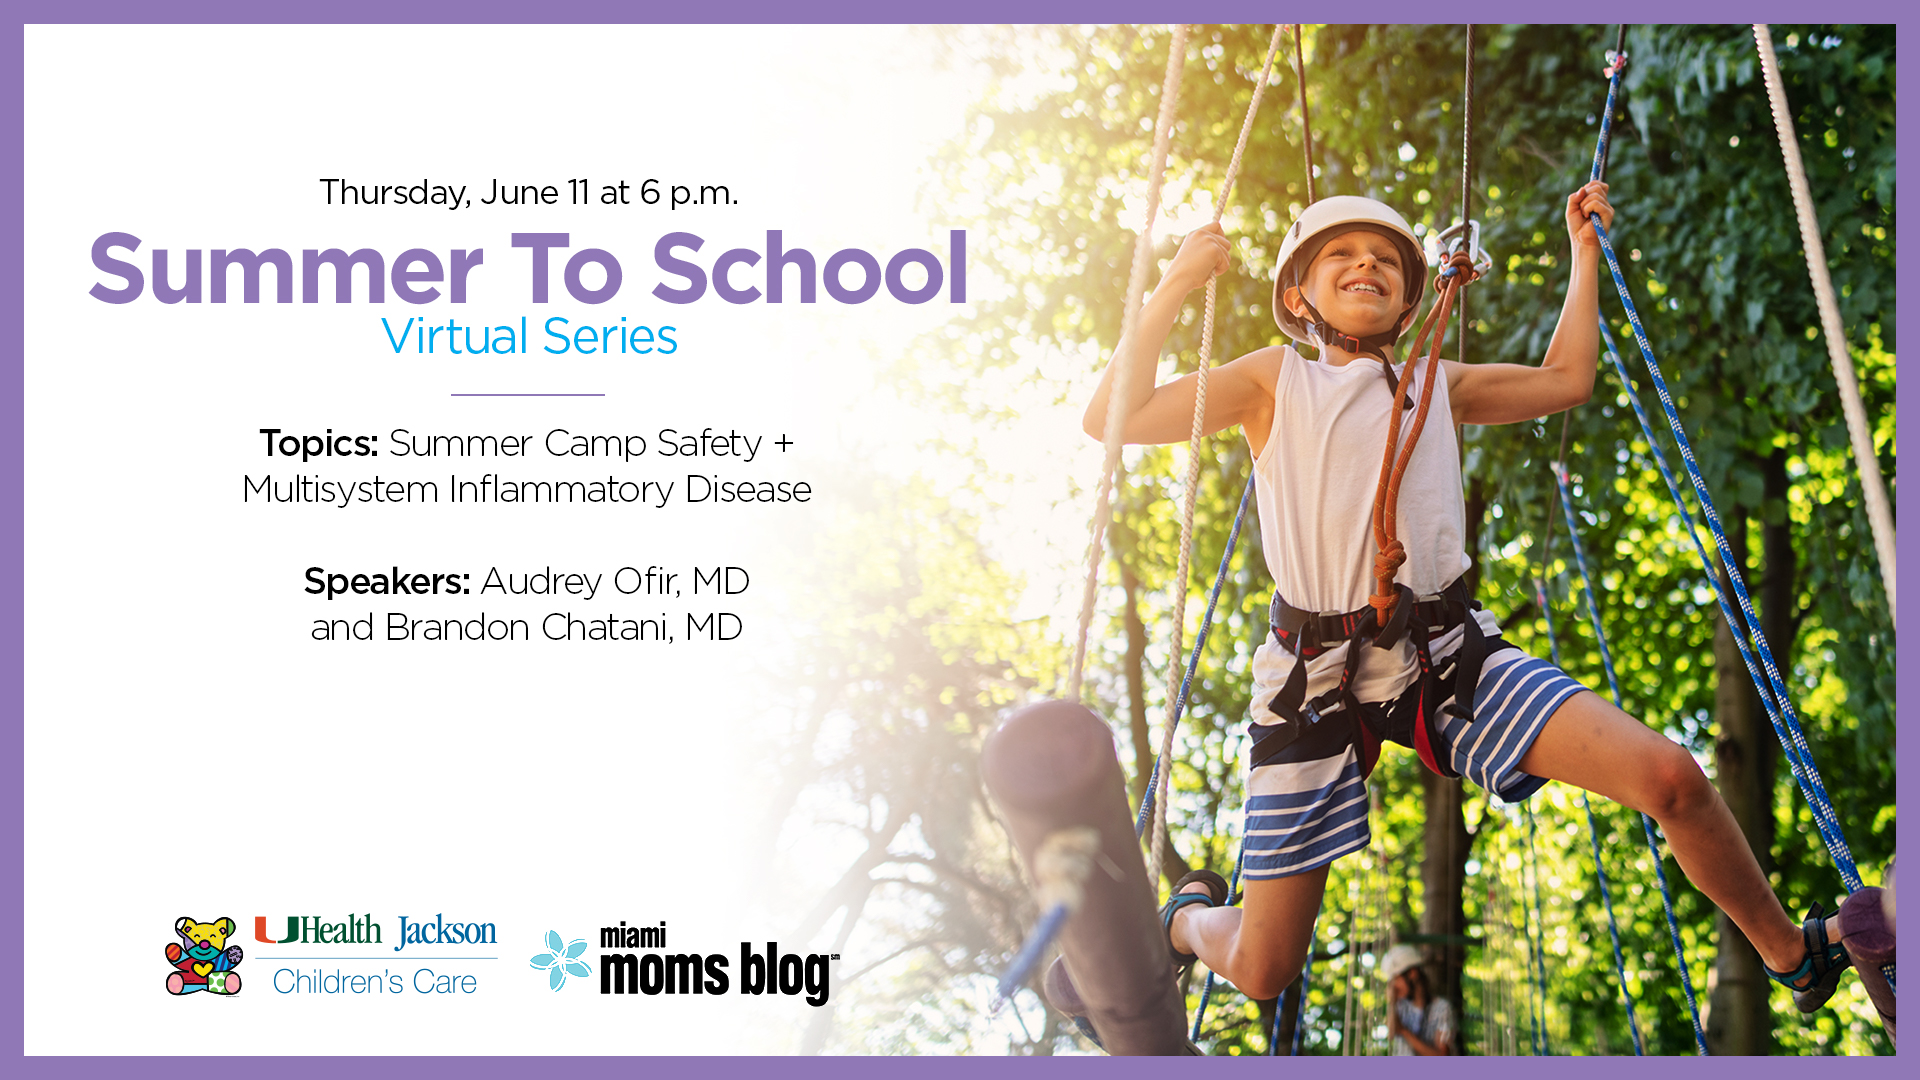 UHealth Jackson Children's Care Hosting FREE Summer Virtual Series